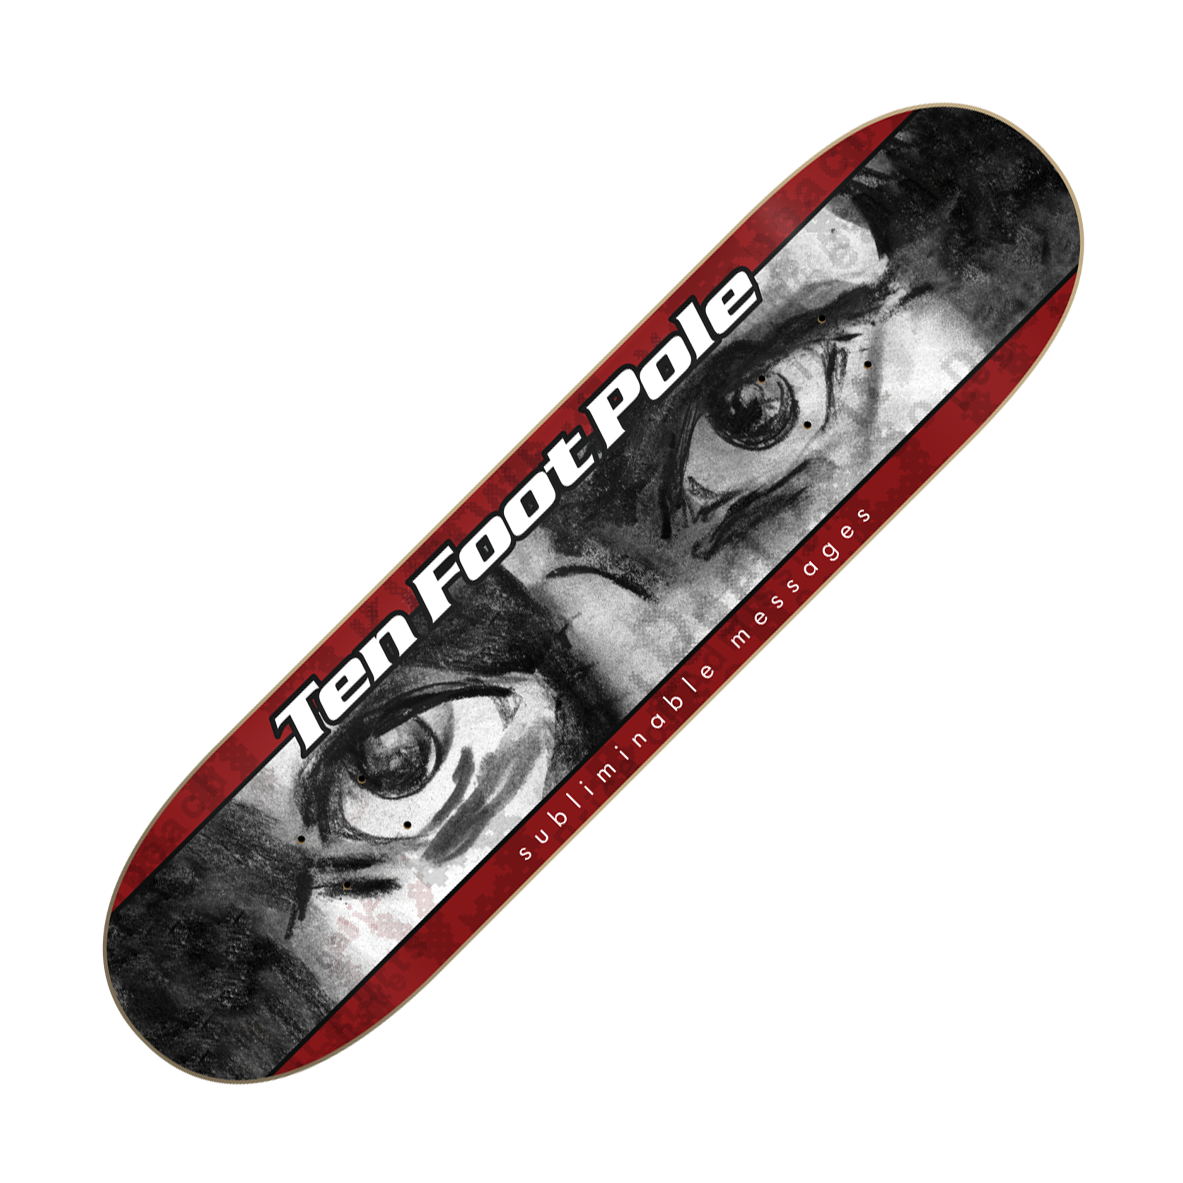 TEN FOOT POLE - "Subliminable Messages" (Skateboard Deck)